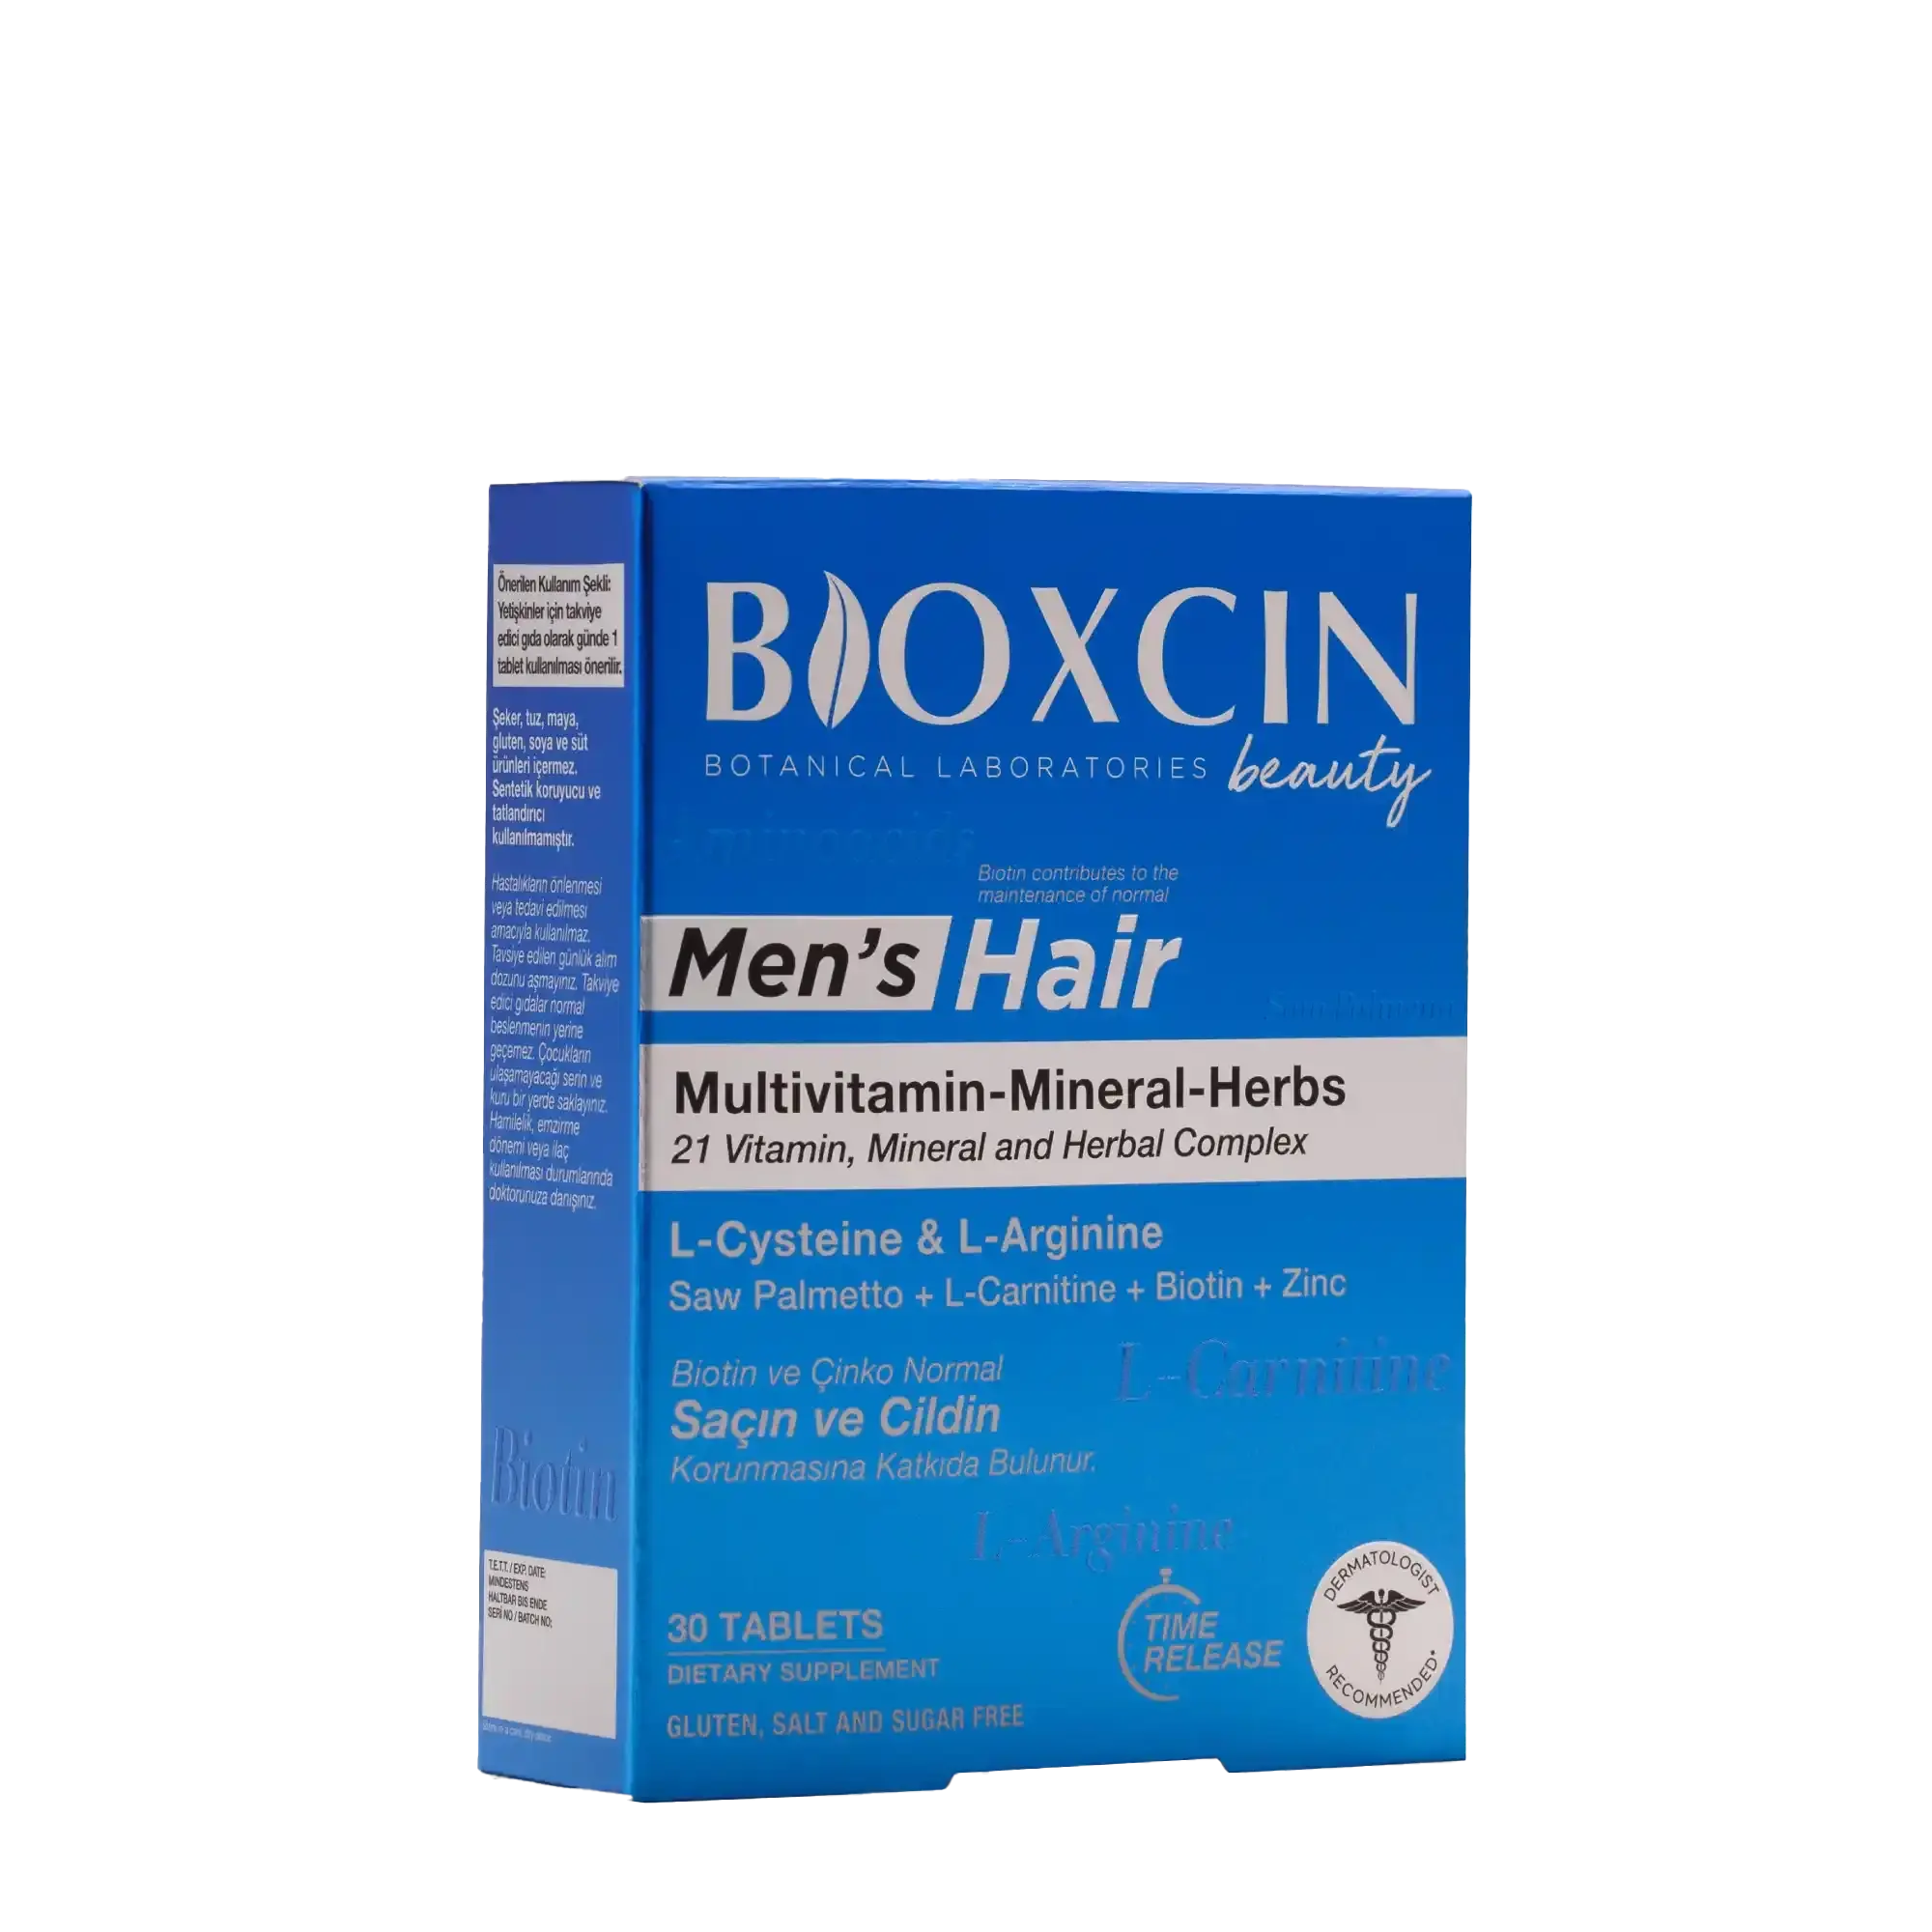 B'oxcin Men's Hair Tablet